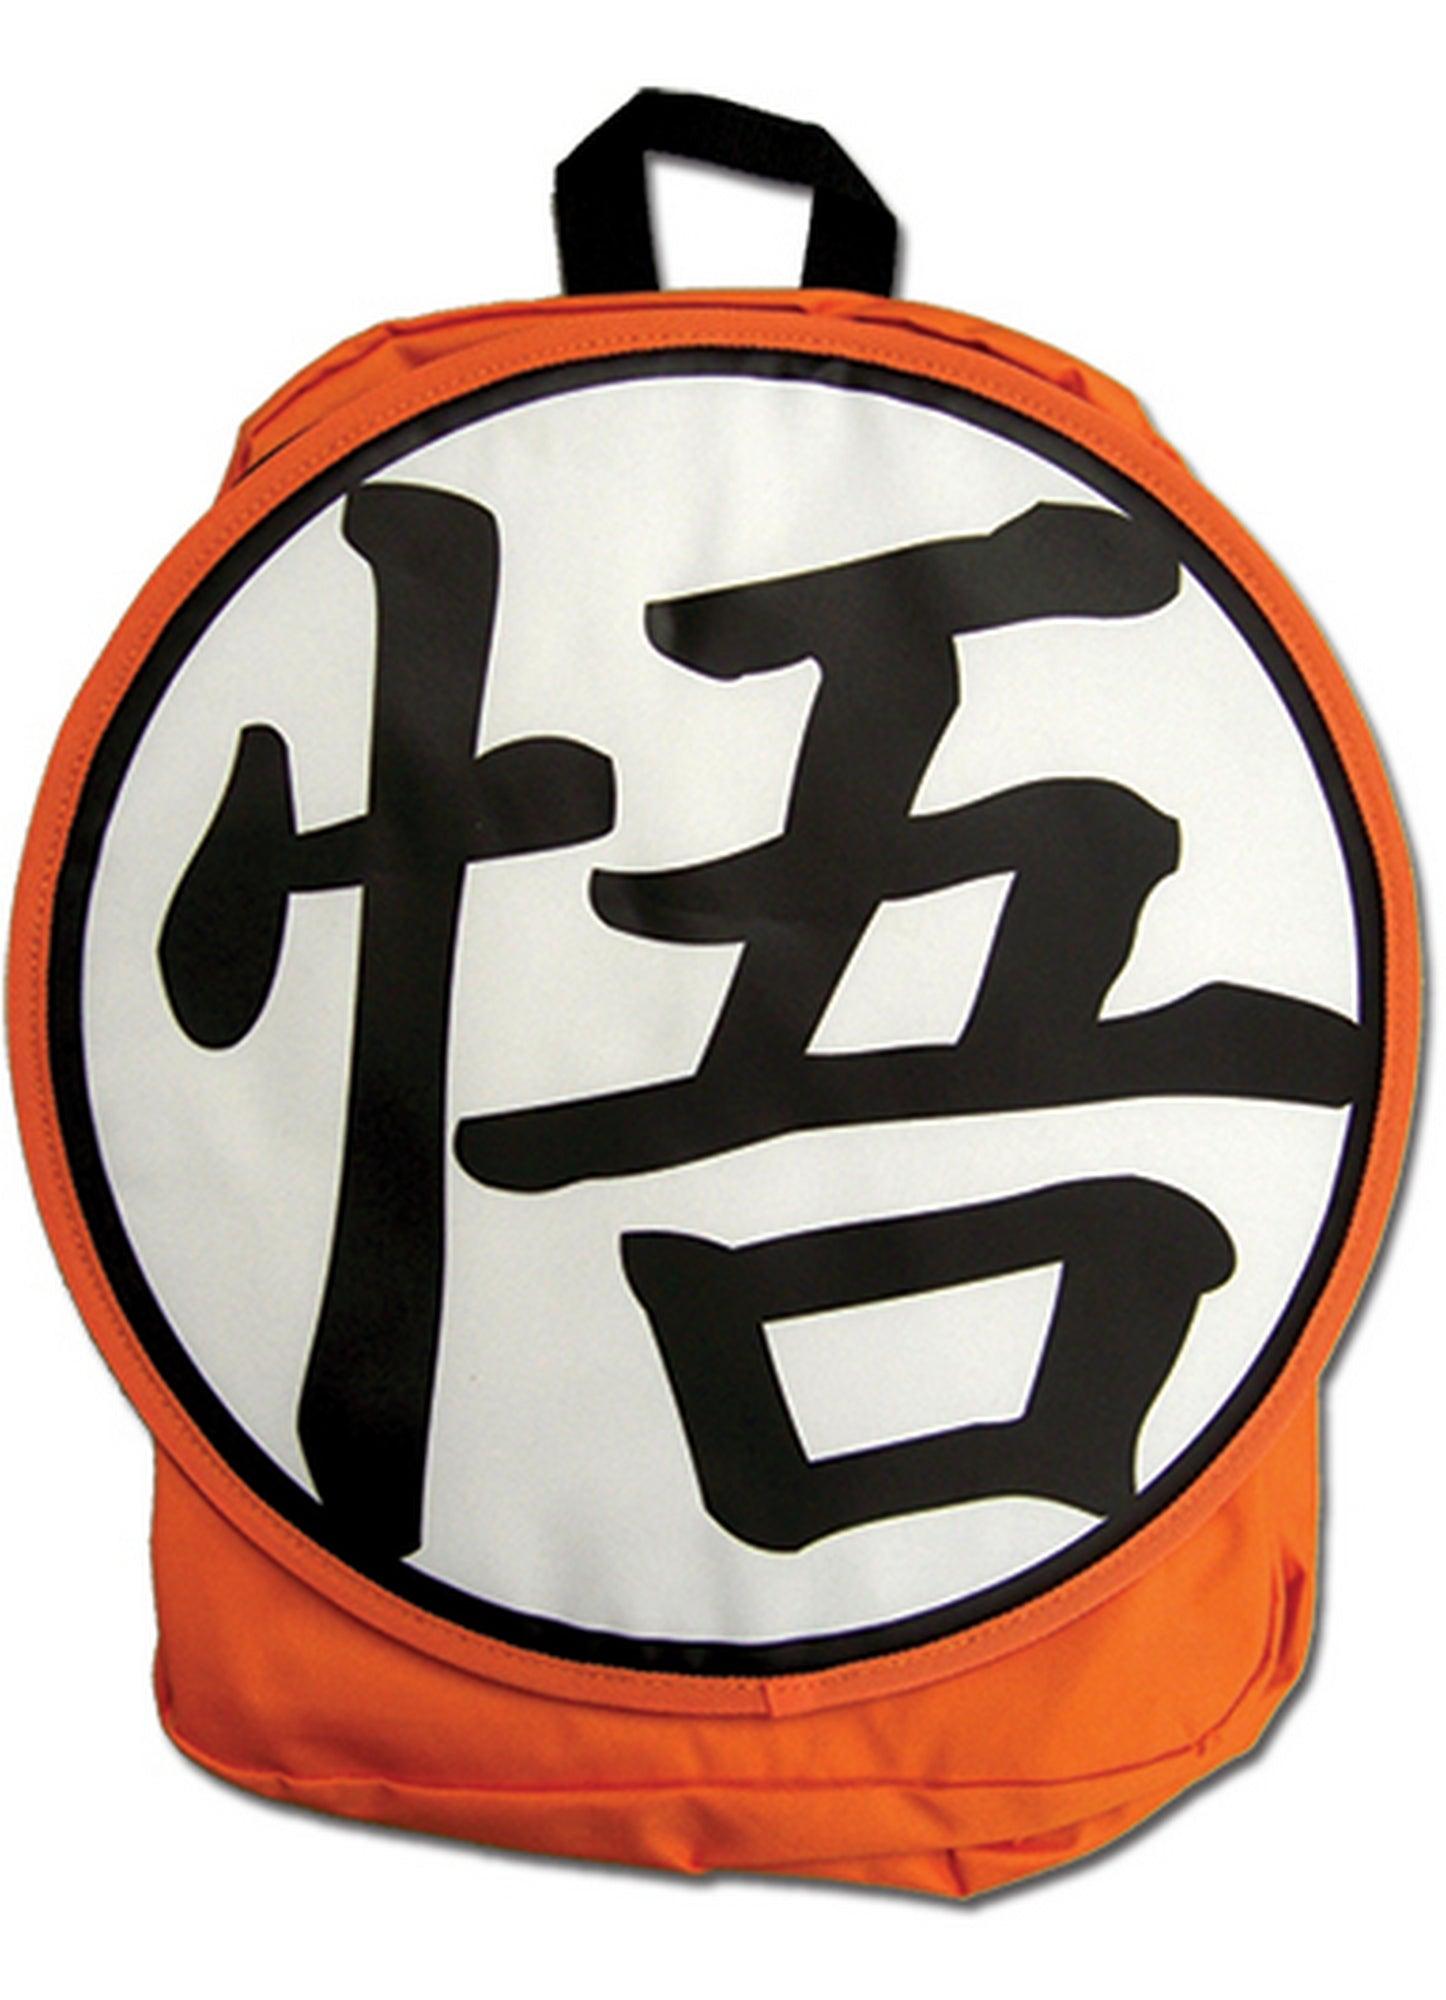 Dragon Ball Z Goku Backpack